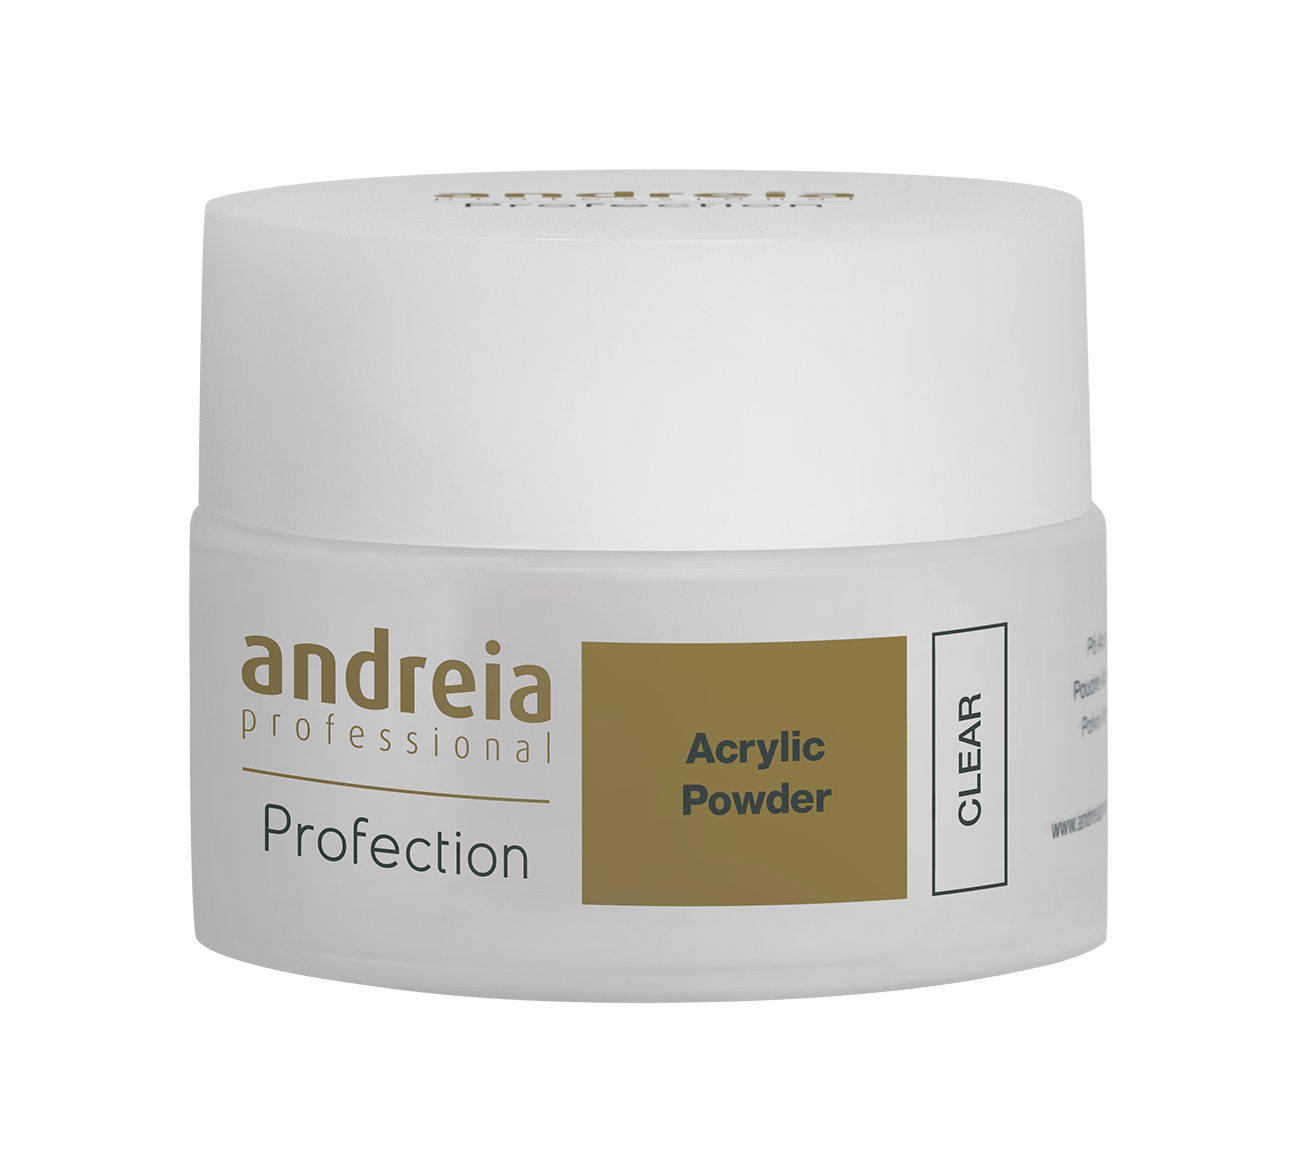 Andreia Professional Profection Acrylic Powder Clear 35g